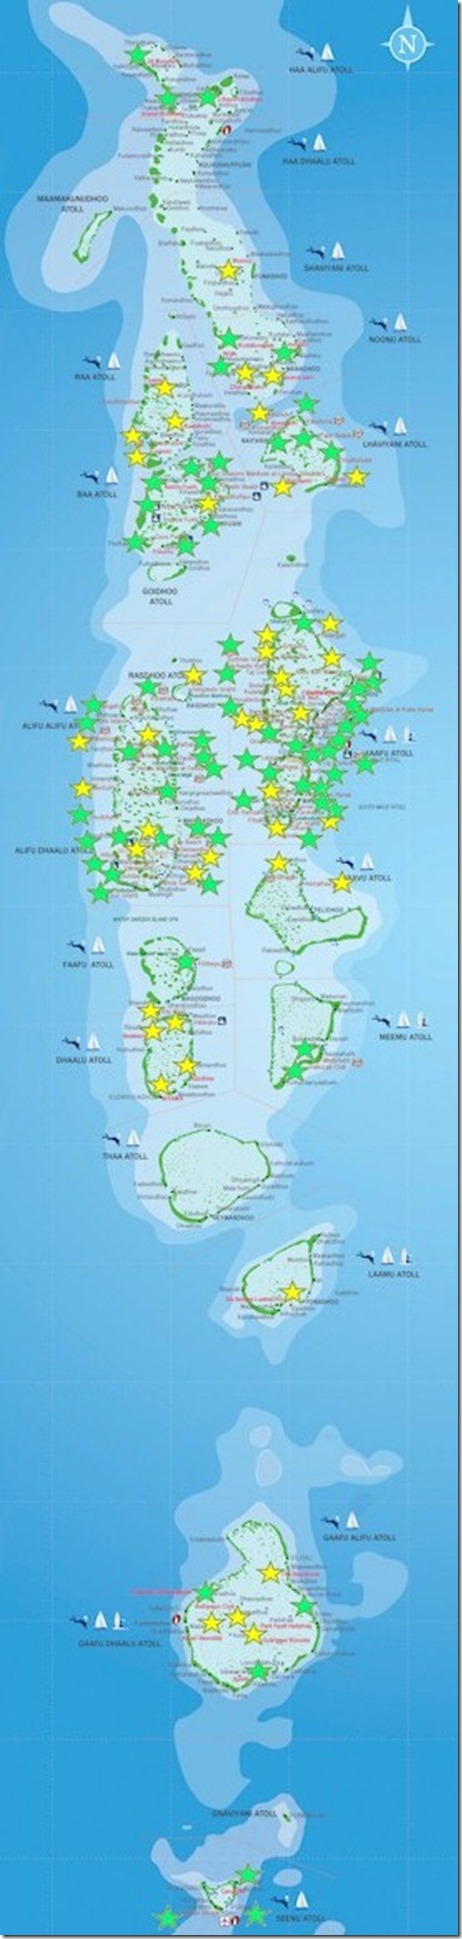 Maldives resorts visited